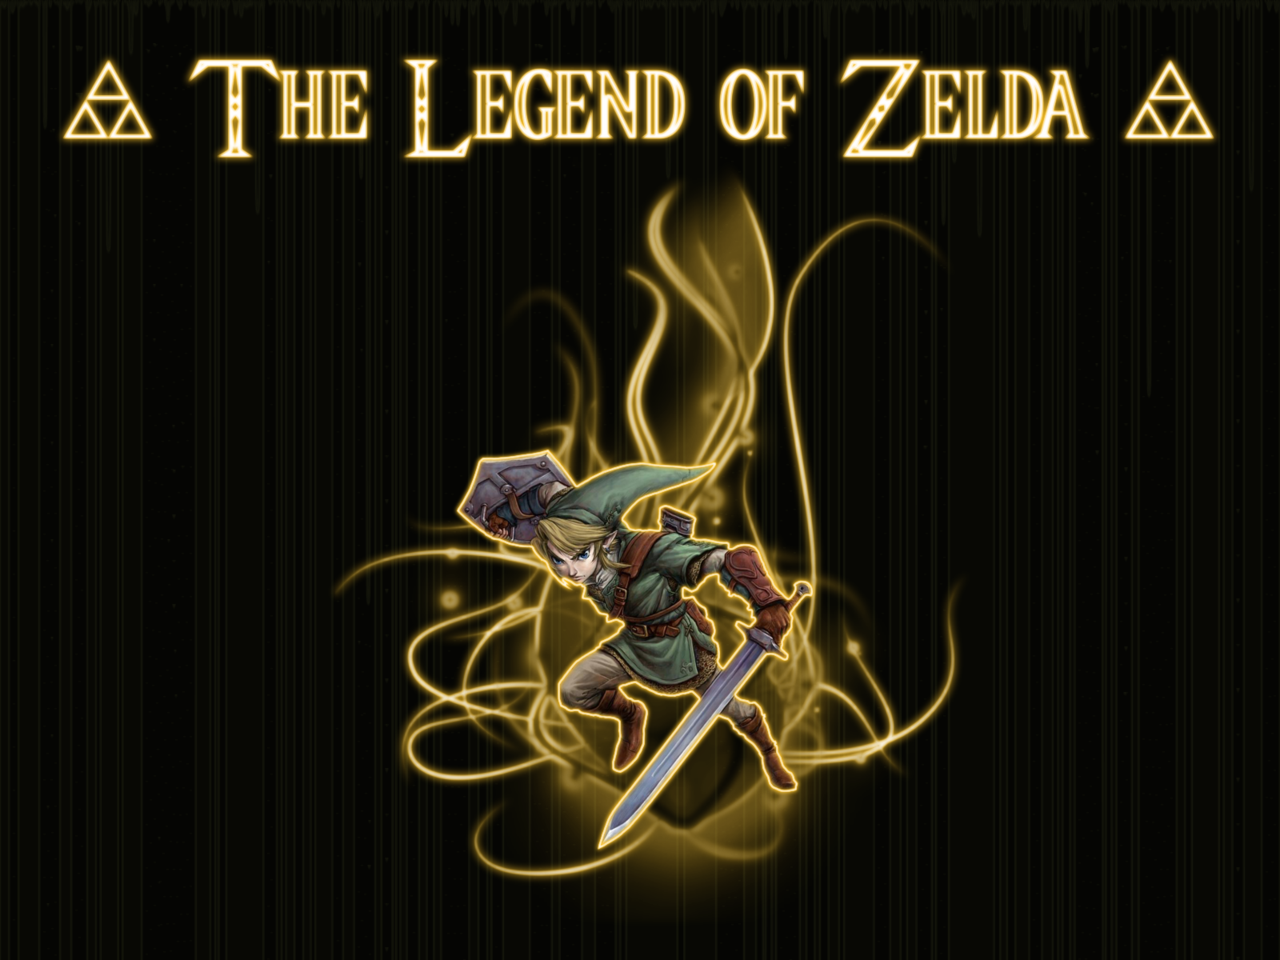 Legend of Zelda Wallpaper 2011 by DimiFW on DeviantArt